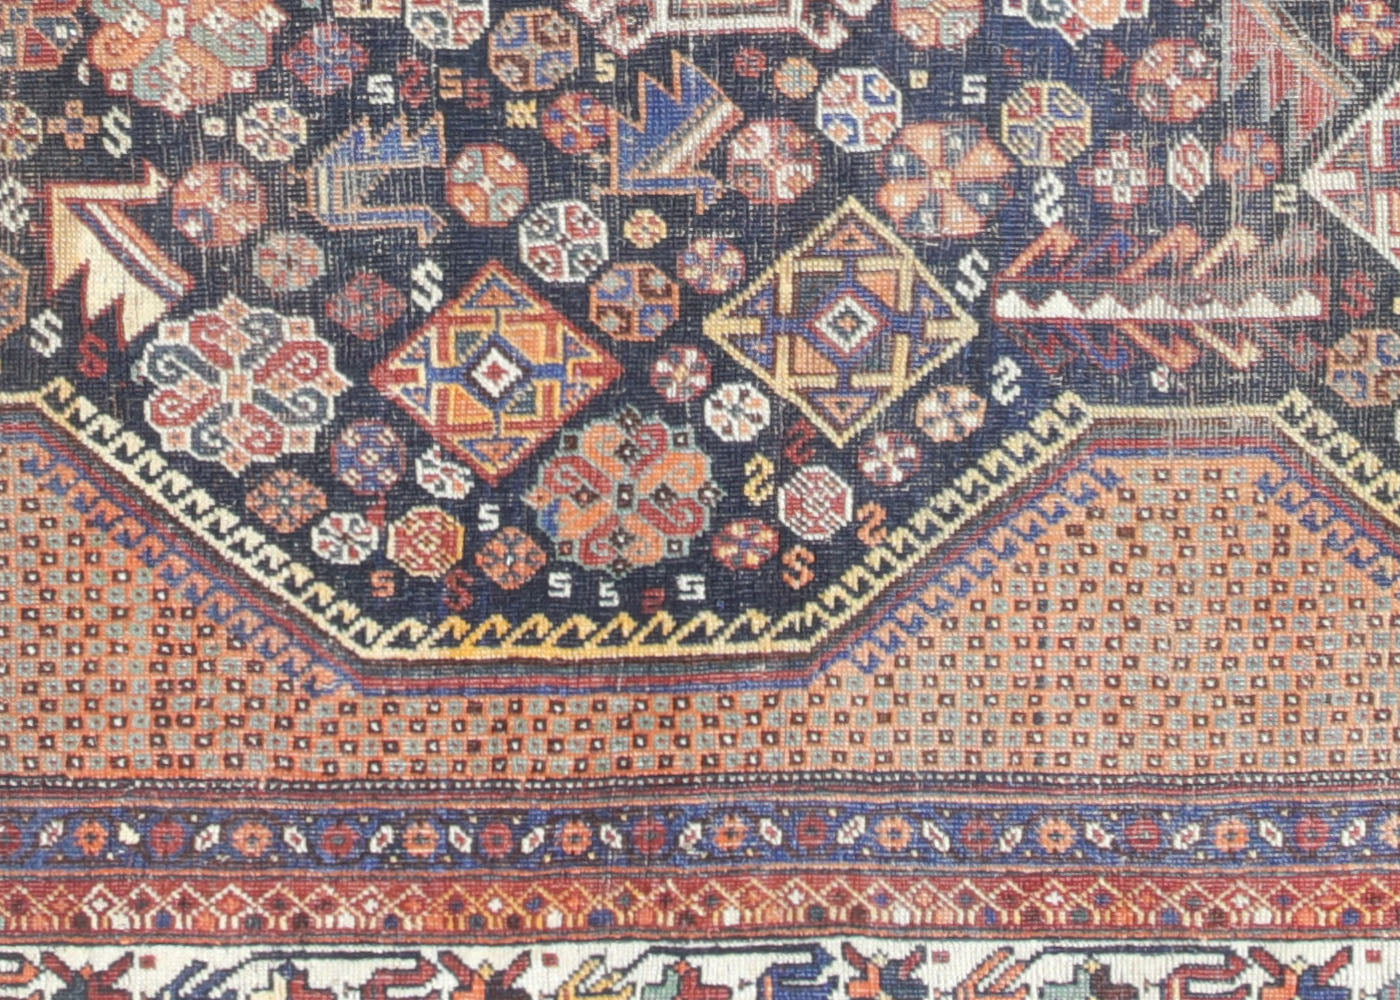 Antique Persian Shiraz Rug - 7'9" x 10'1"